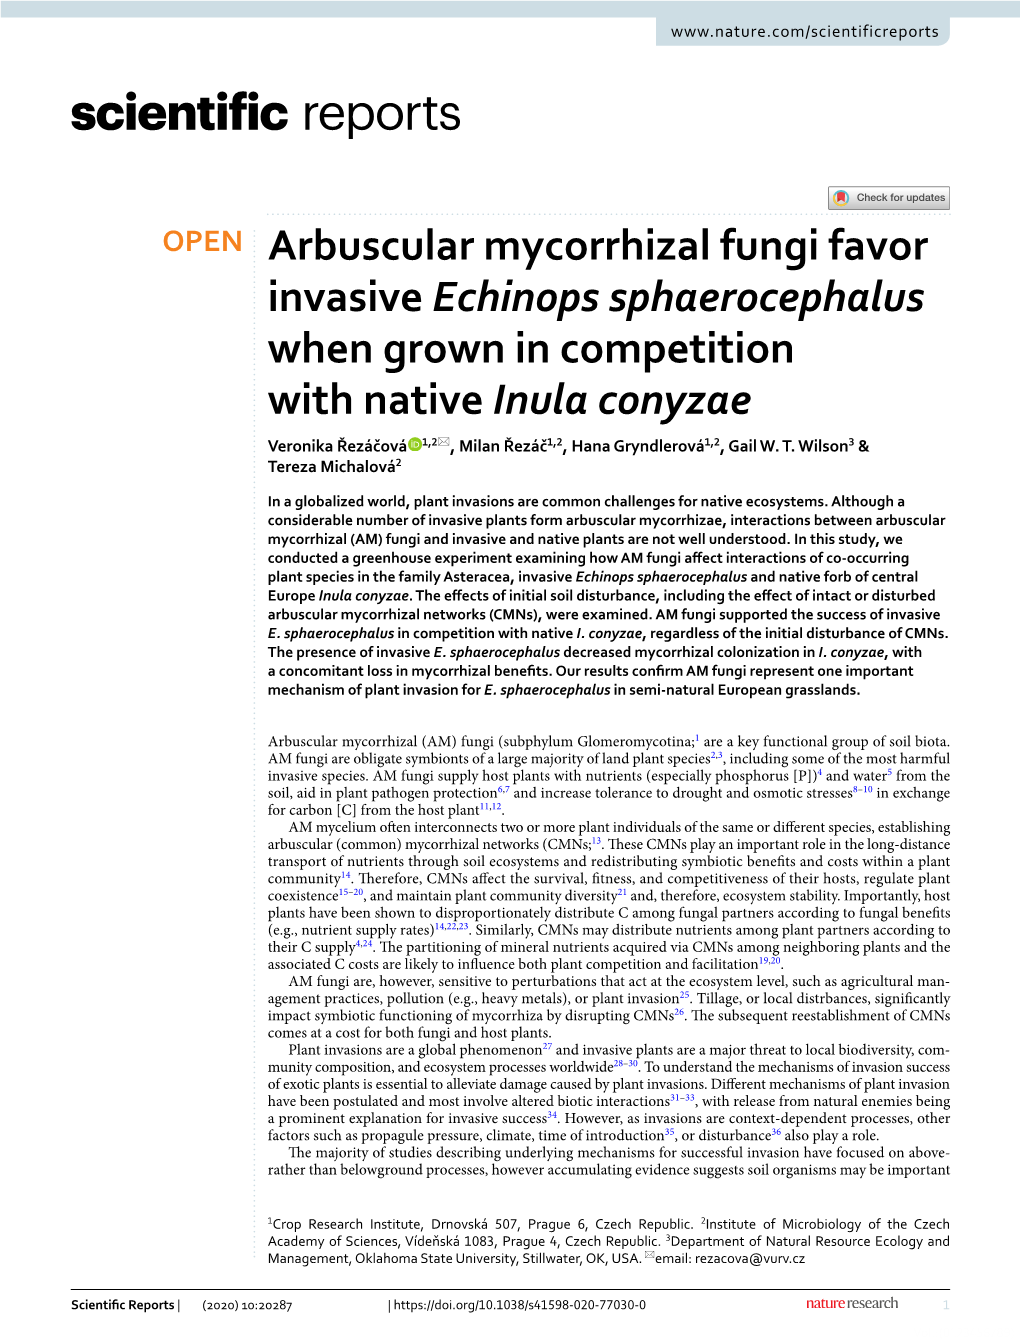 Arbuscular Mycorrhizal Fungi Favor Invasive Echinops